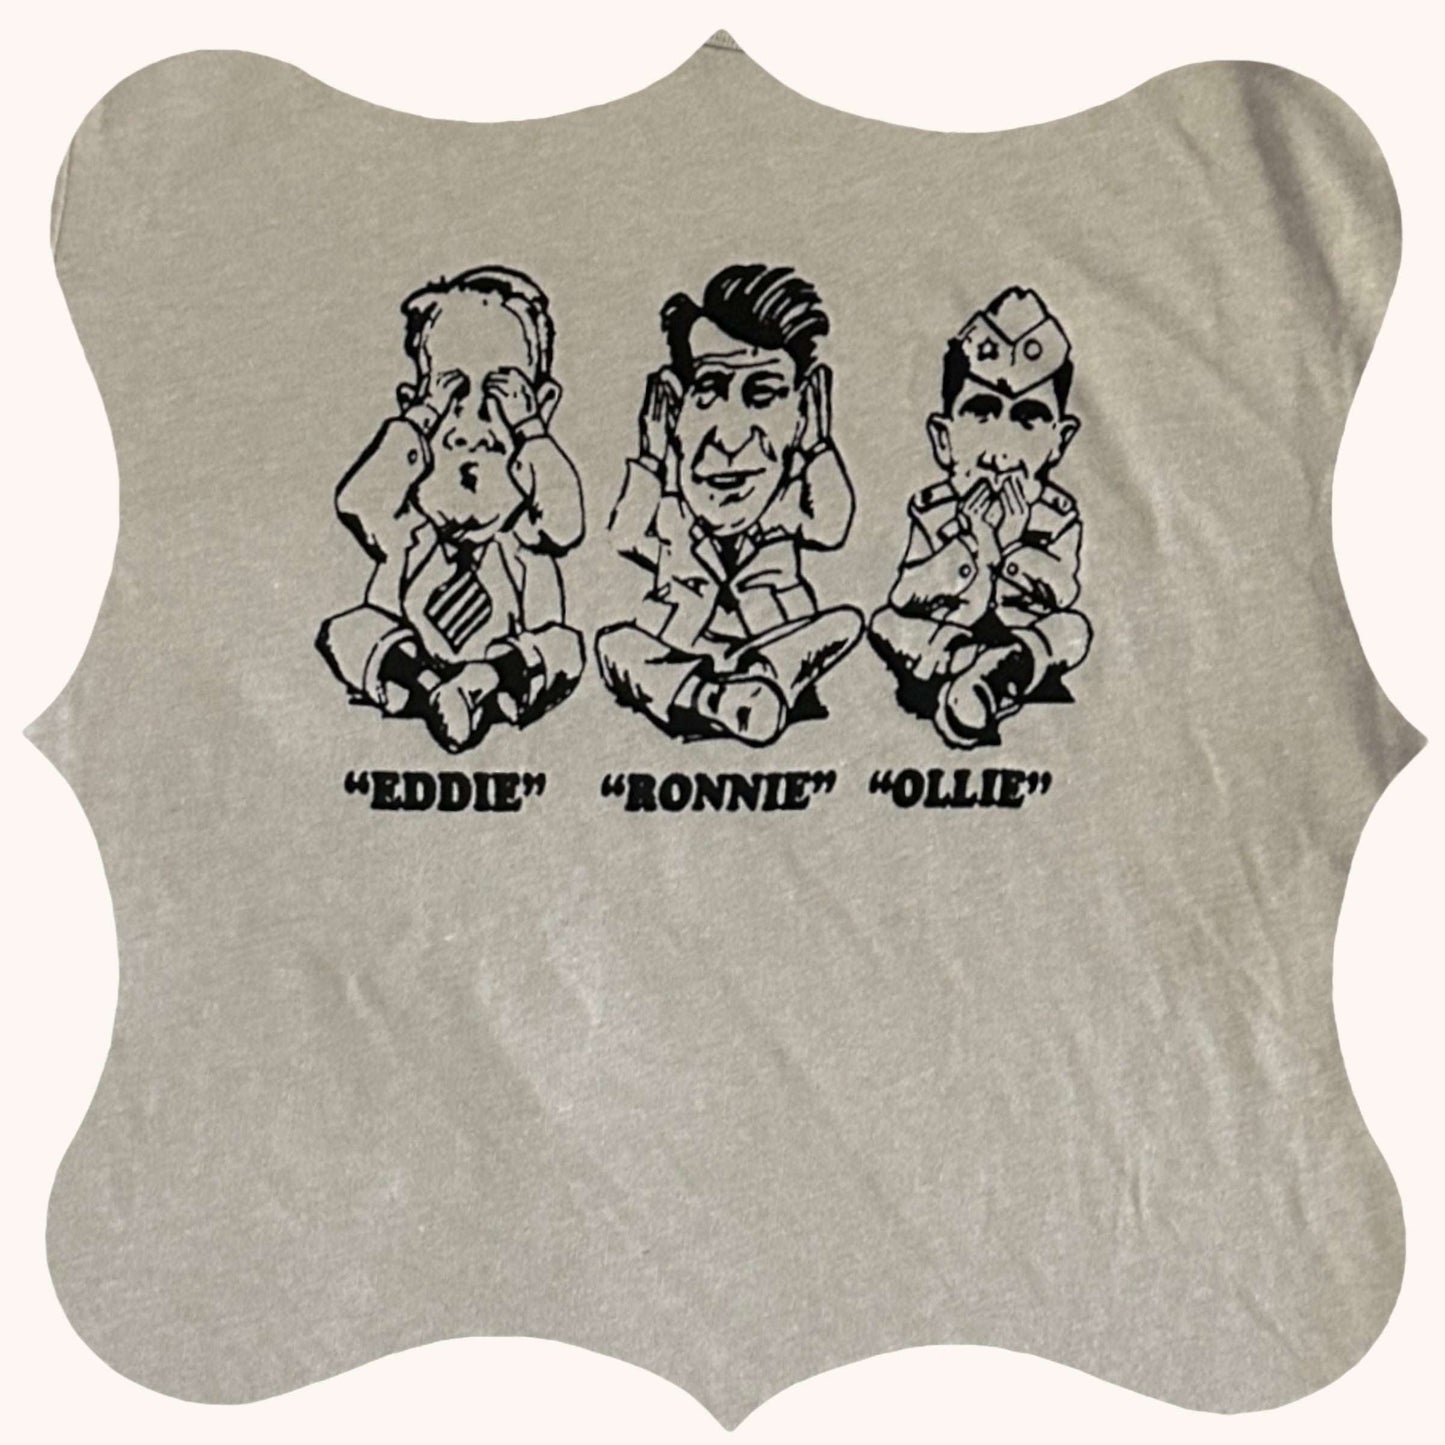 See No Evil Iran-Contra Affair Vintage Reproduction T-shirt